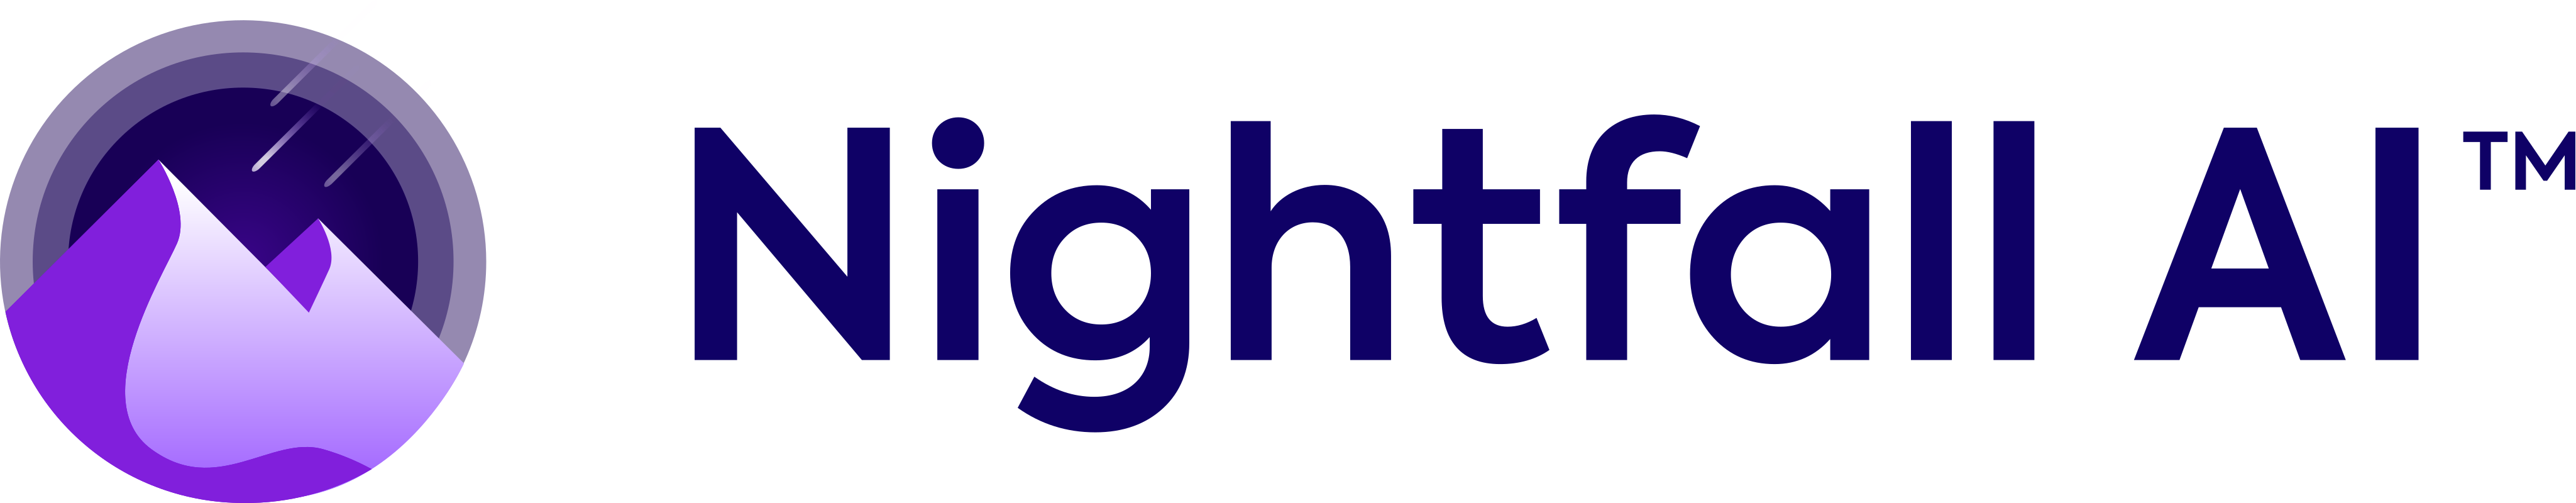 Nightfall AI logo